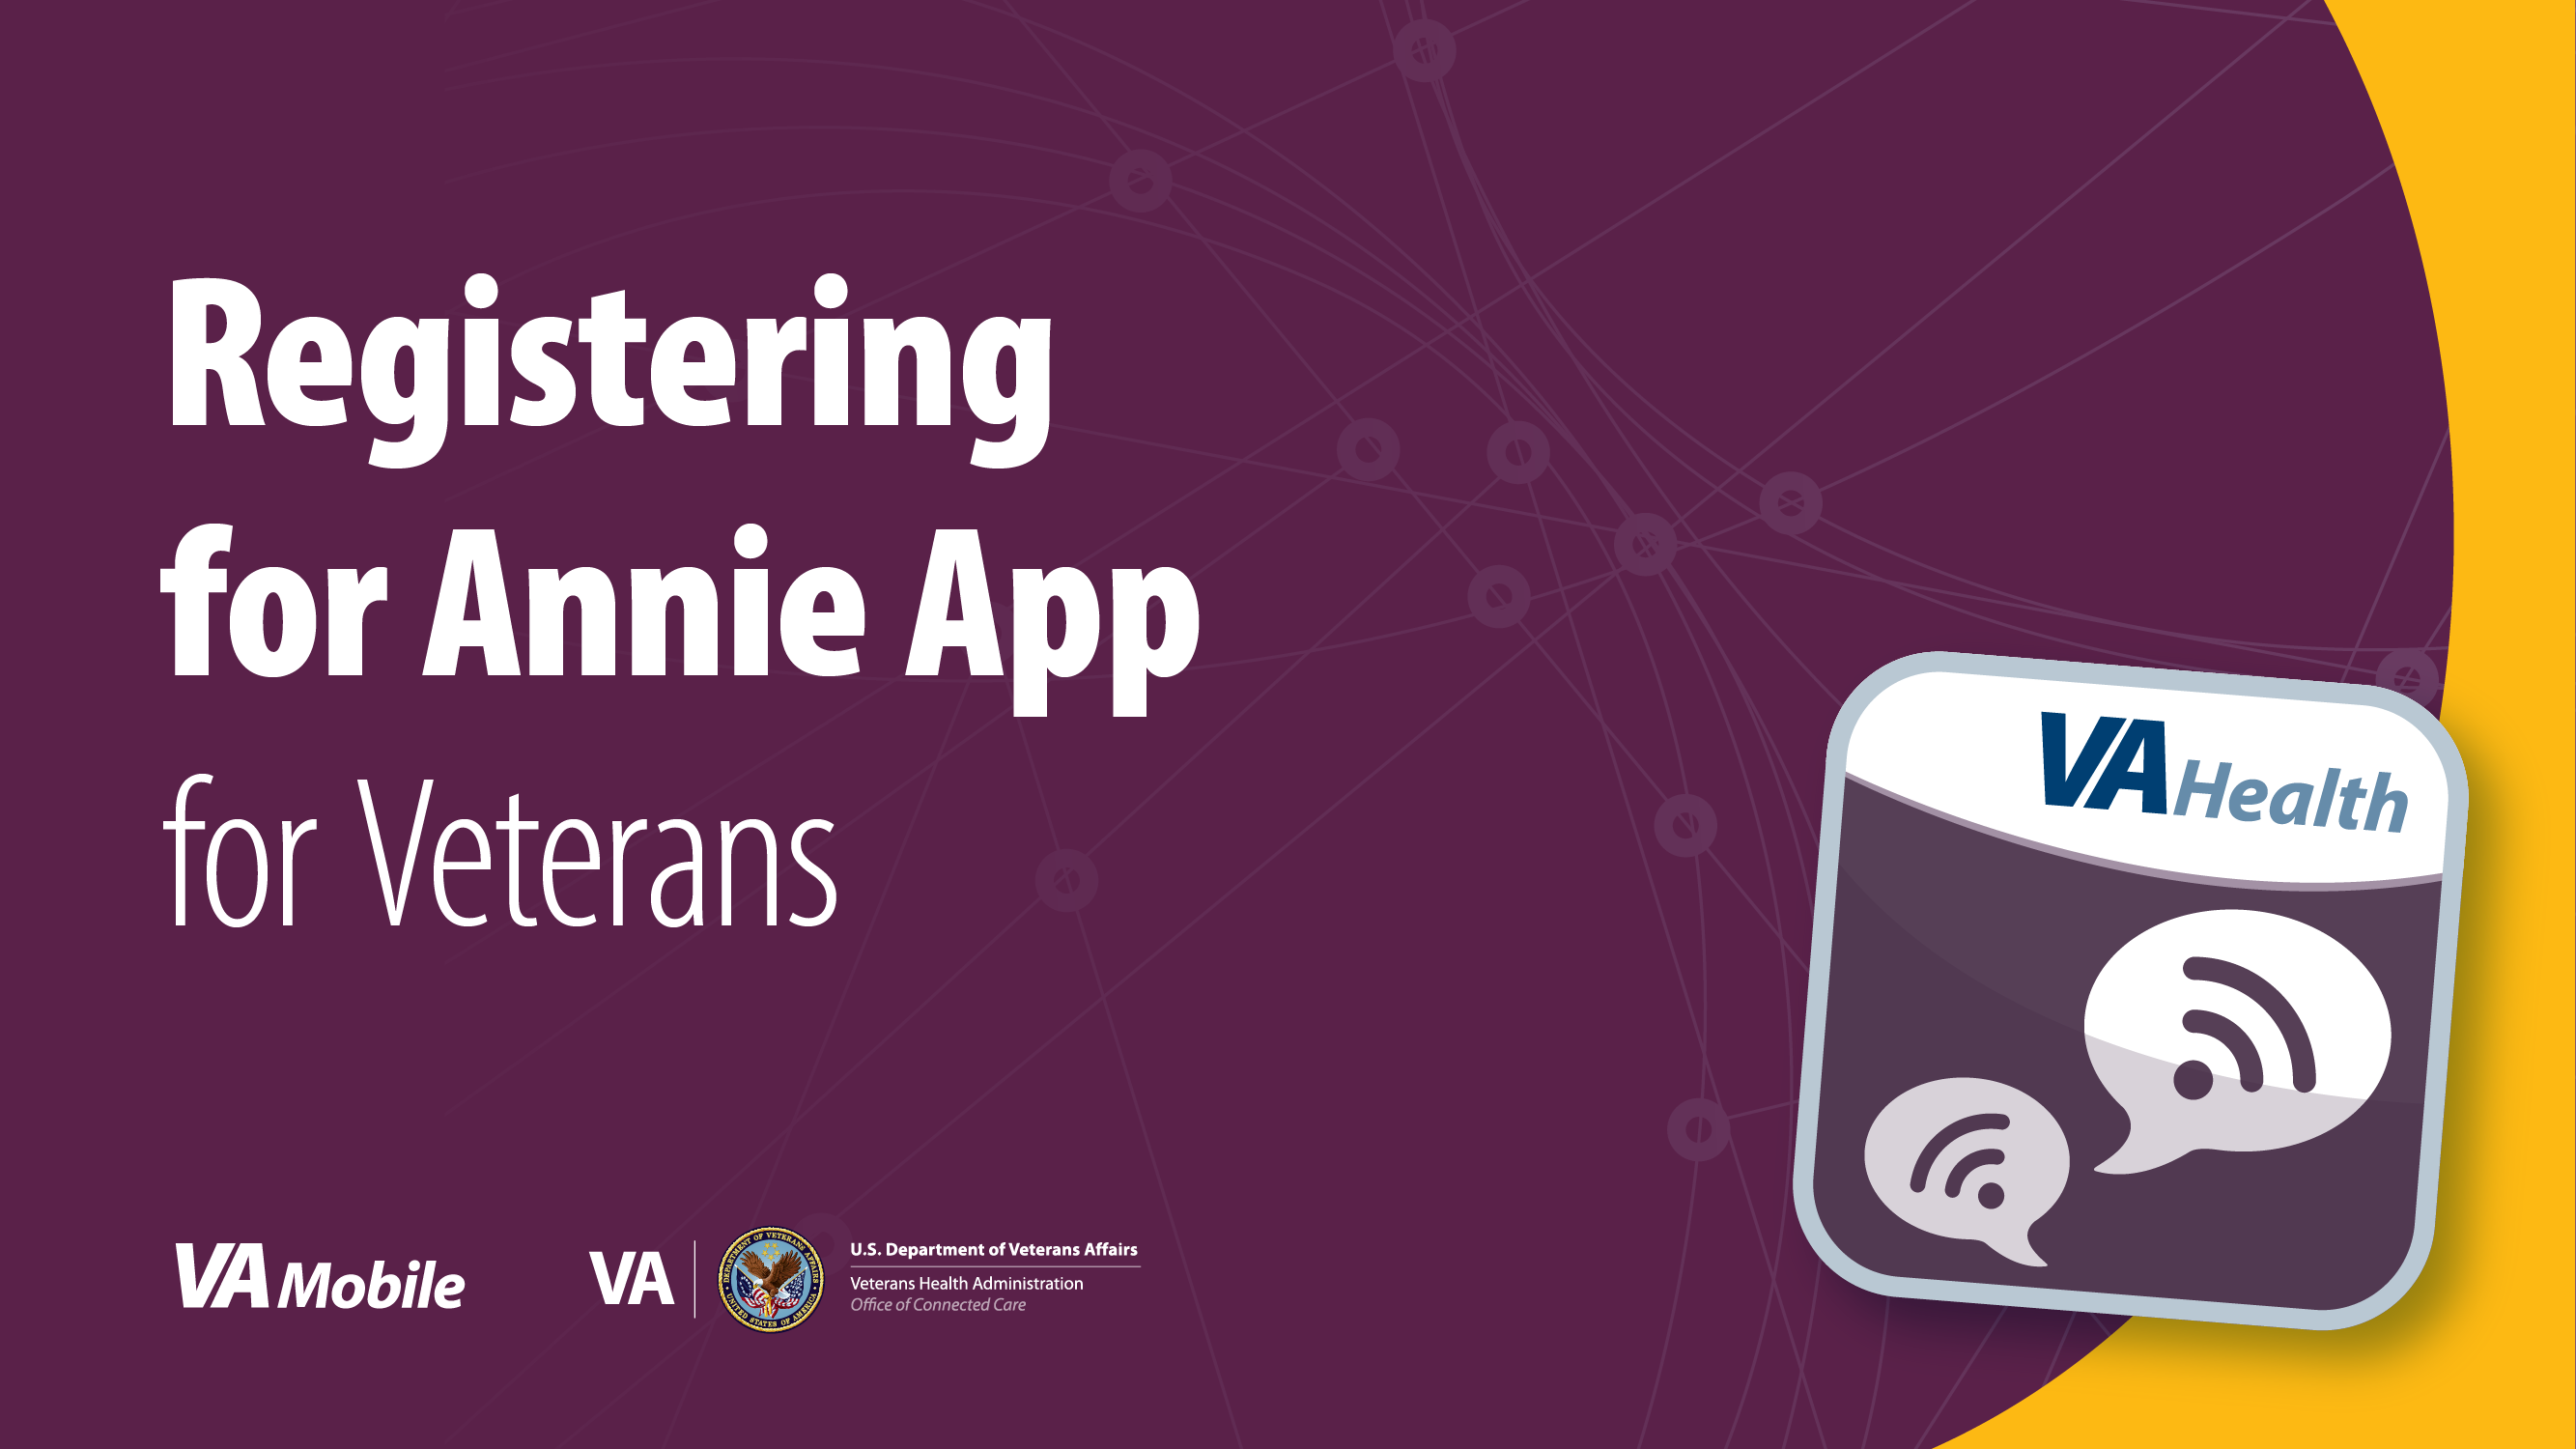 "Registering for Annie App for Veterans" on a dark purple background 